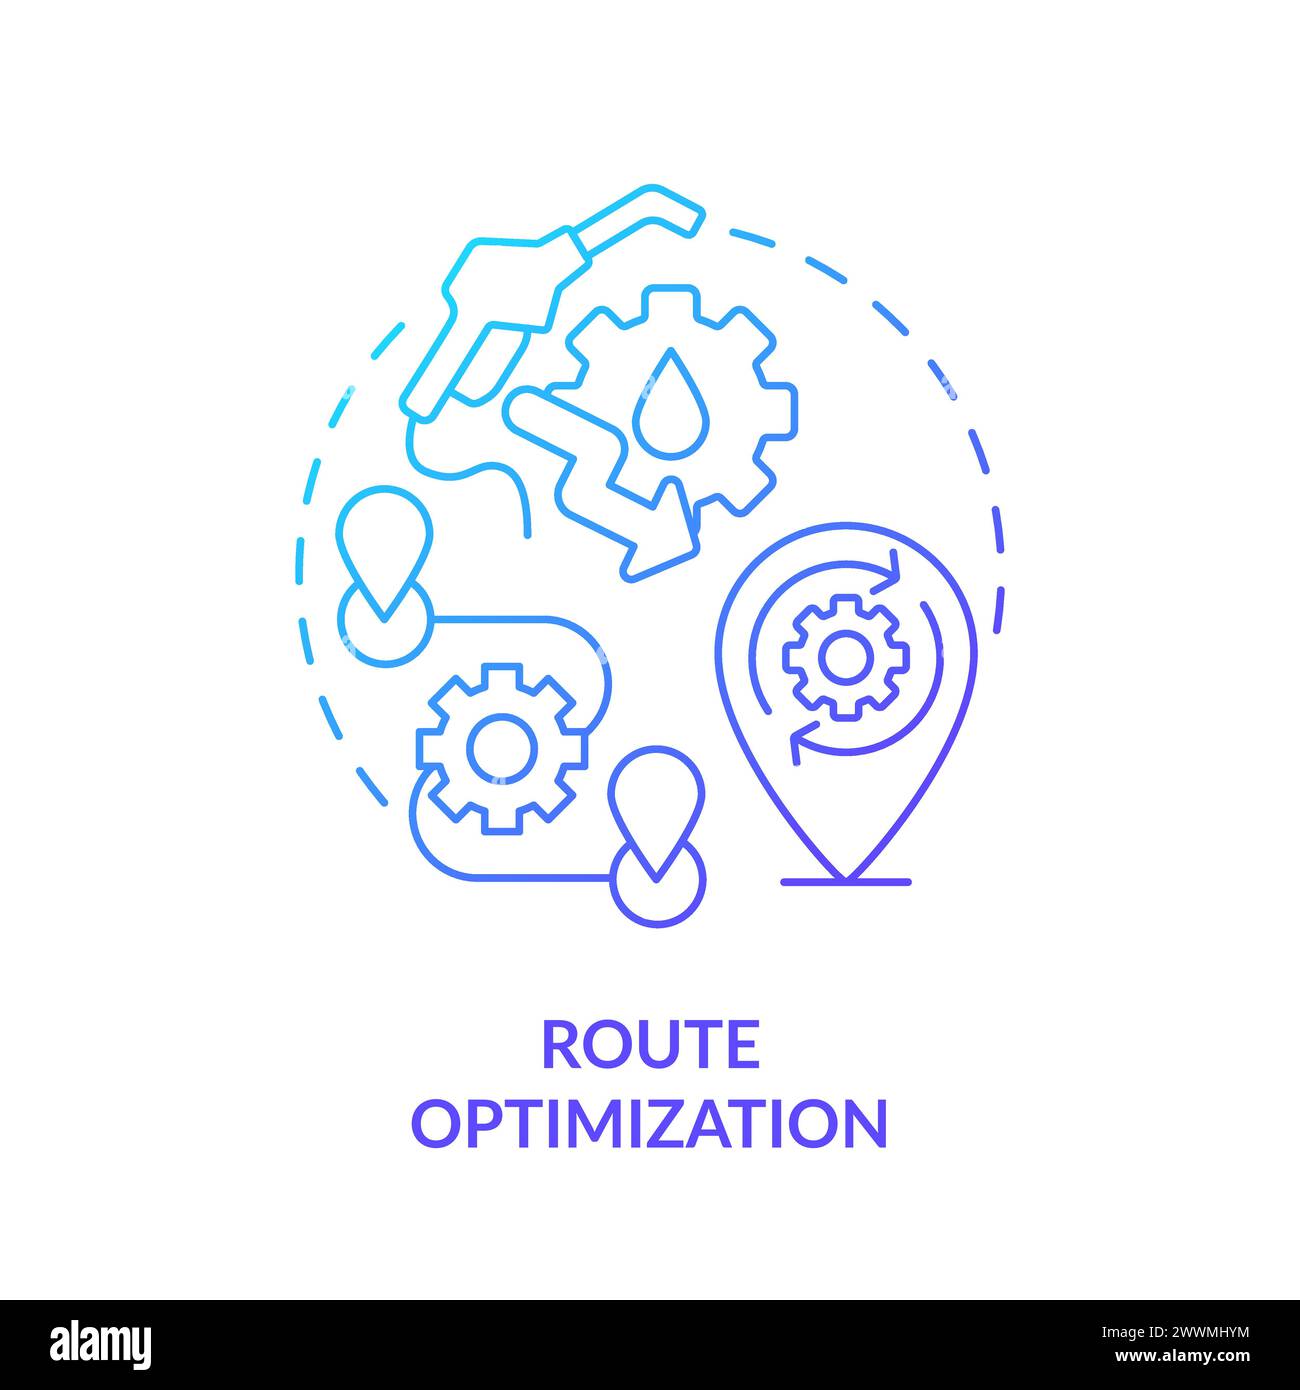 Route optimization blue gradient concept icon Stock Vector